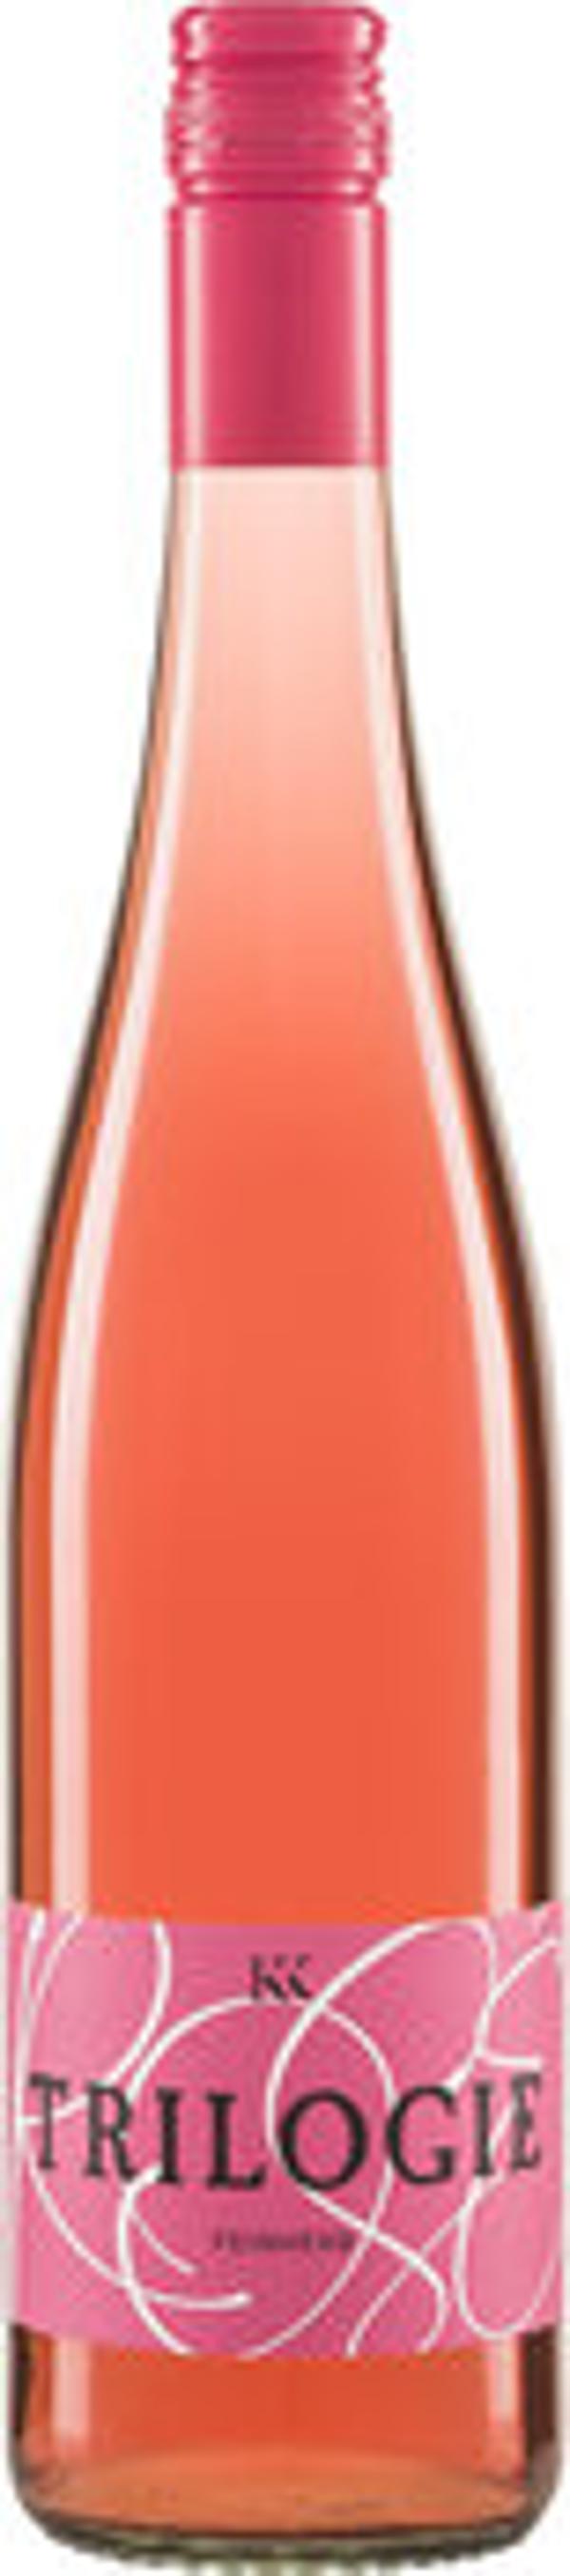 Produktfoto zu TRILOGIE Cuvée Rosé QW Rheinhessen